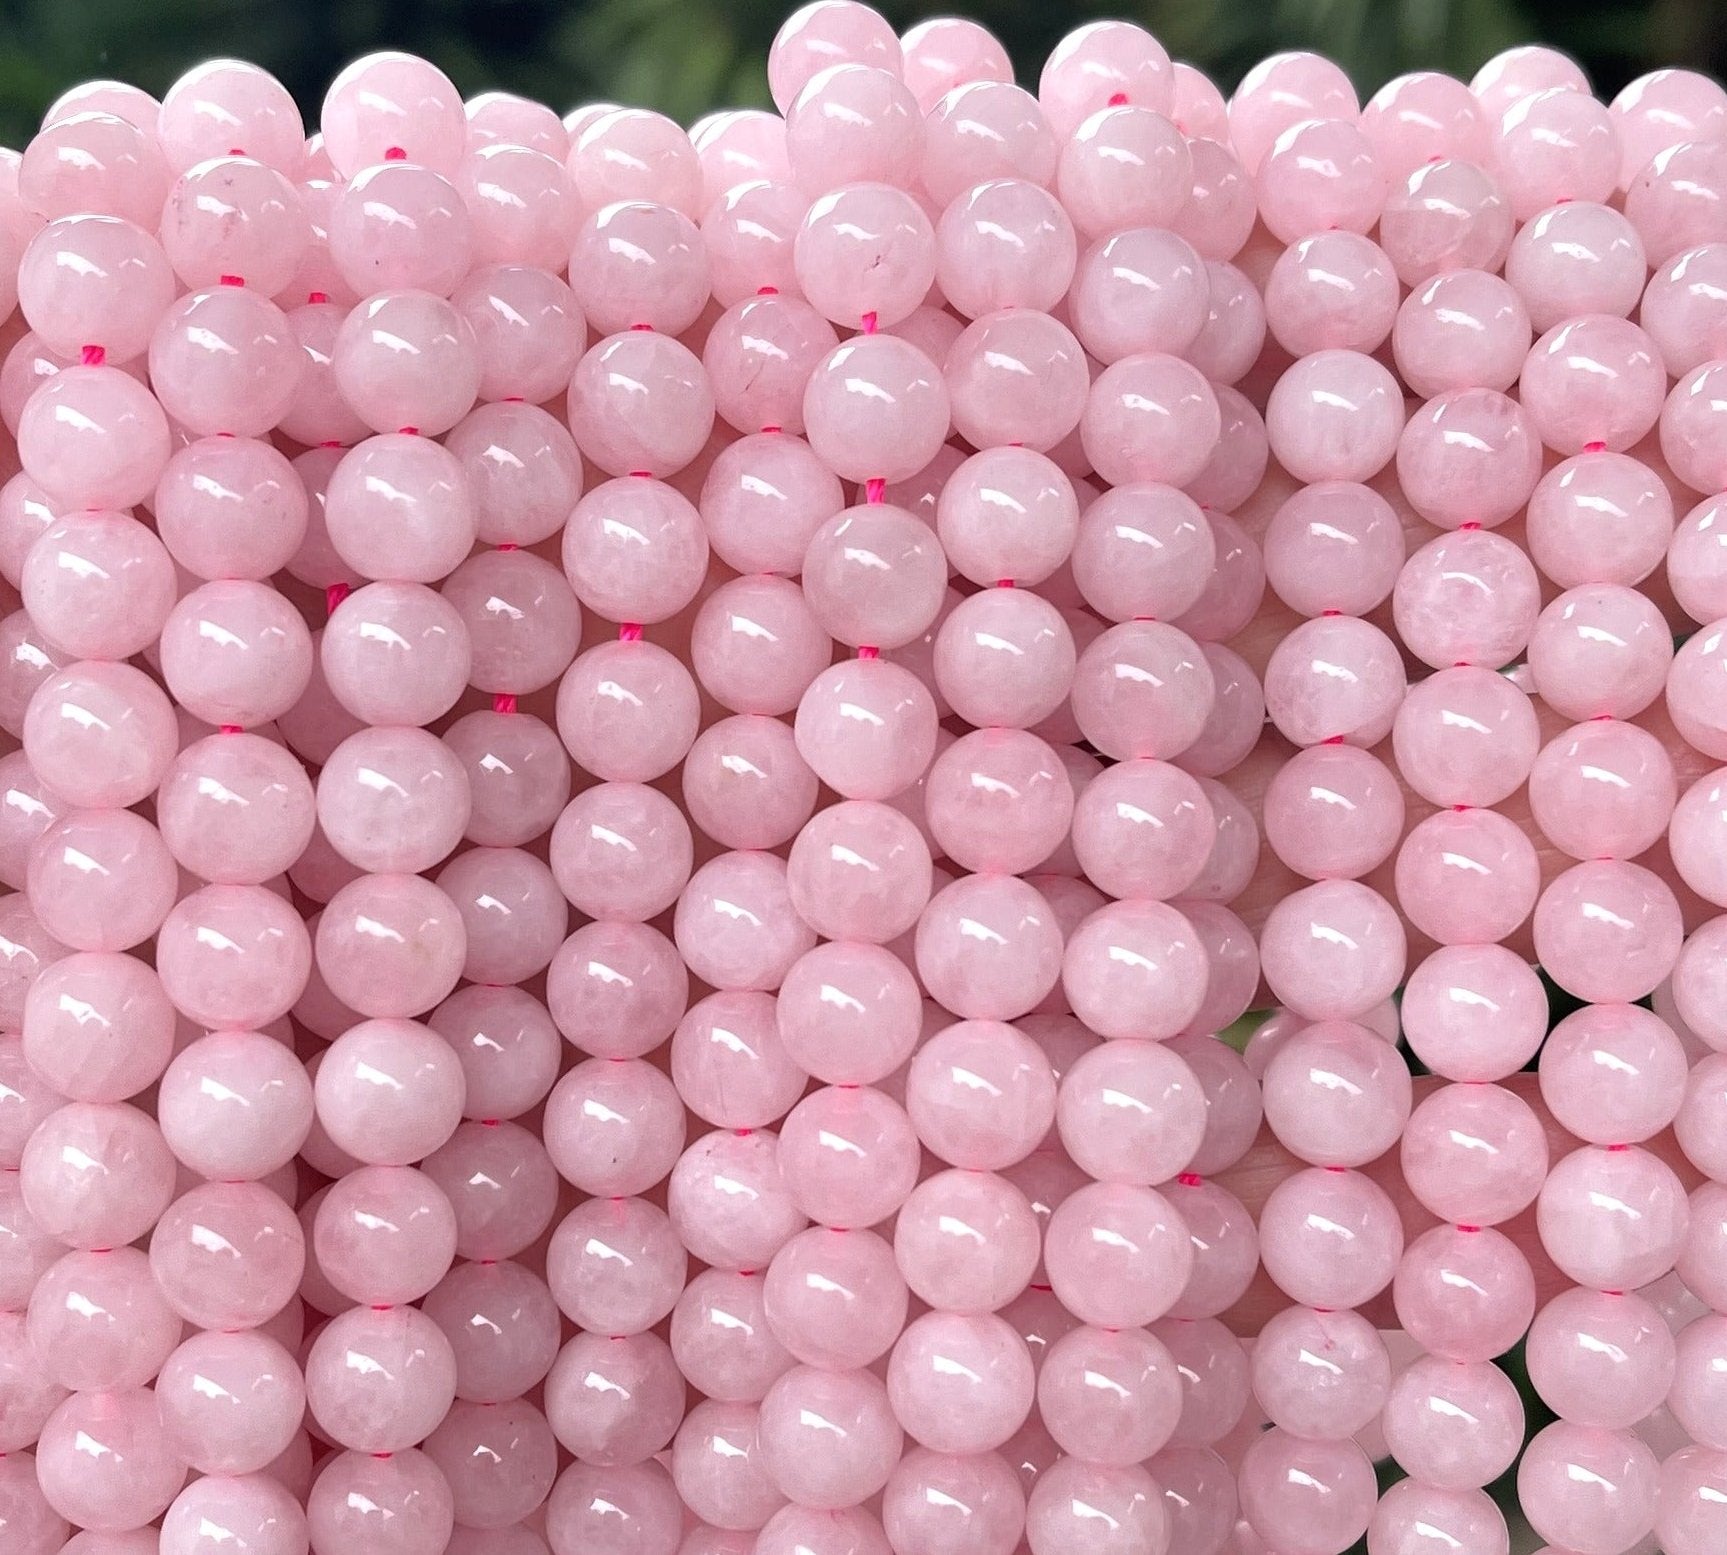 Rose Quartz 8mm round natural gemstone beads 15.5" strand - Oz Beads 